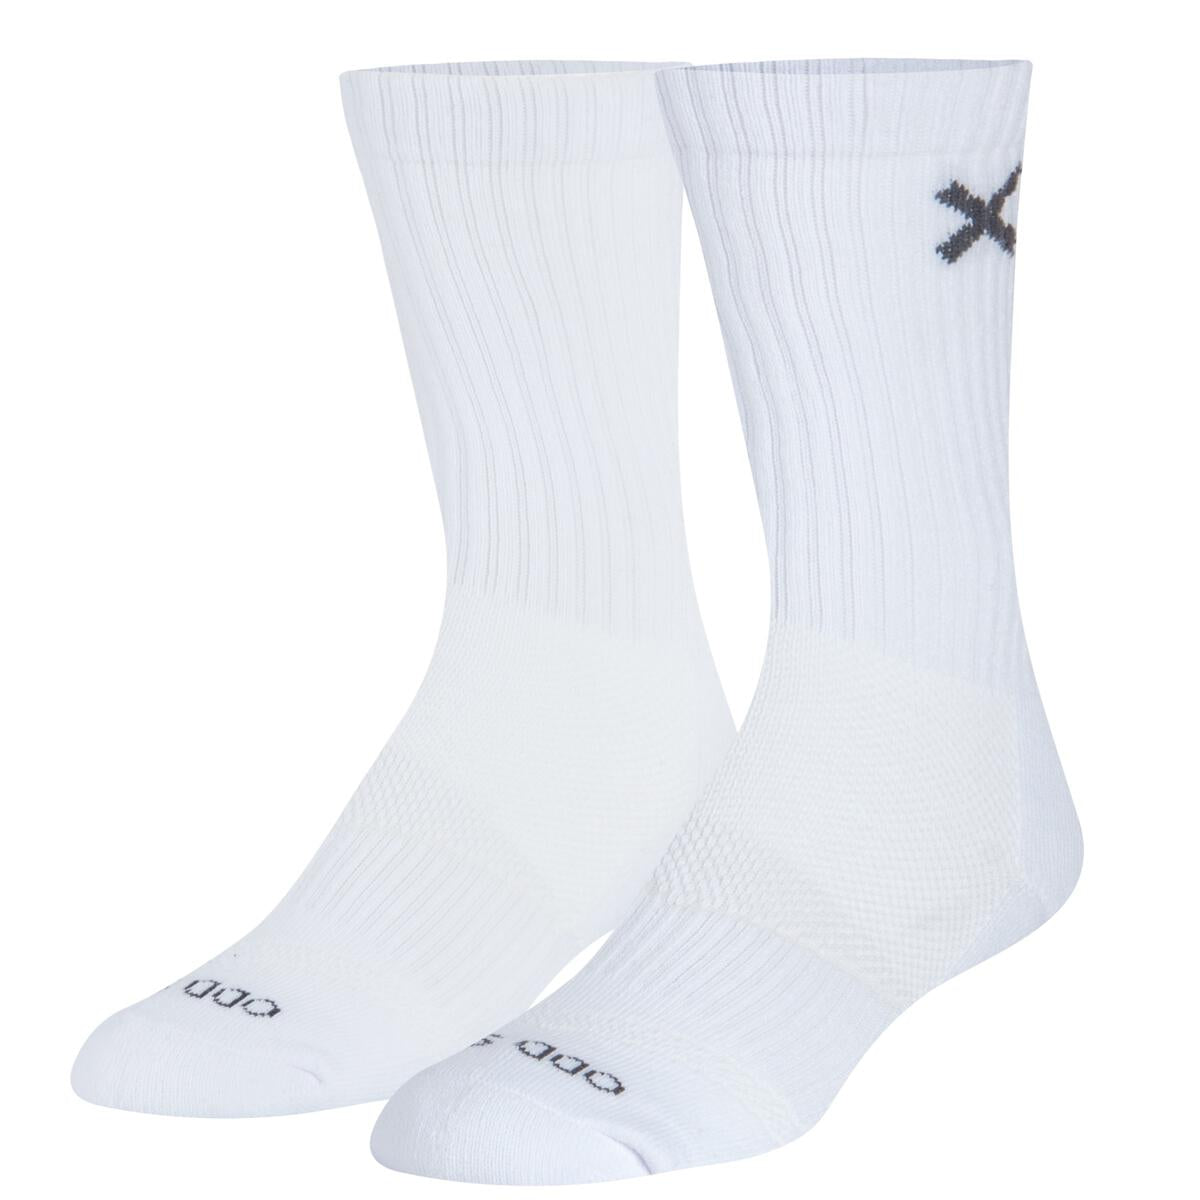 Chaussettes ODDSOX - Lot de 3 white socks